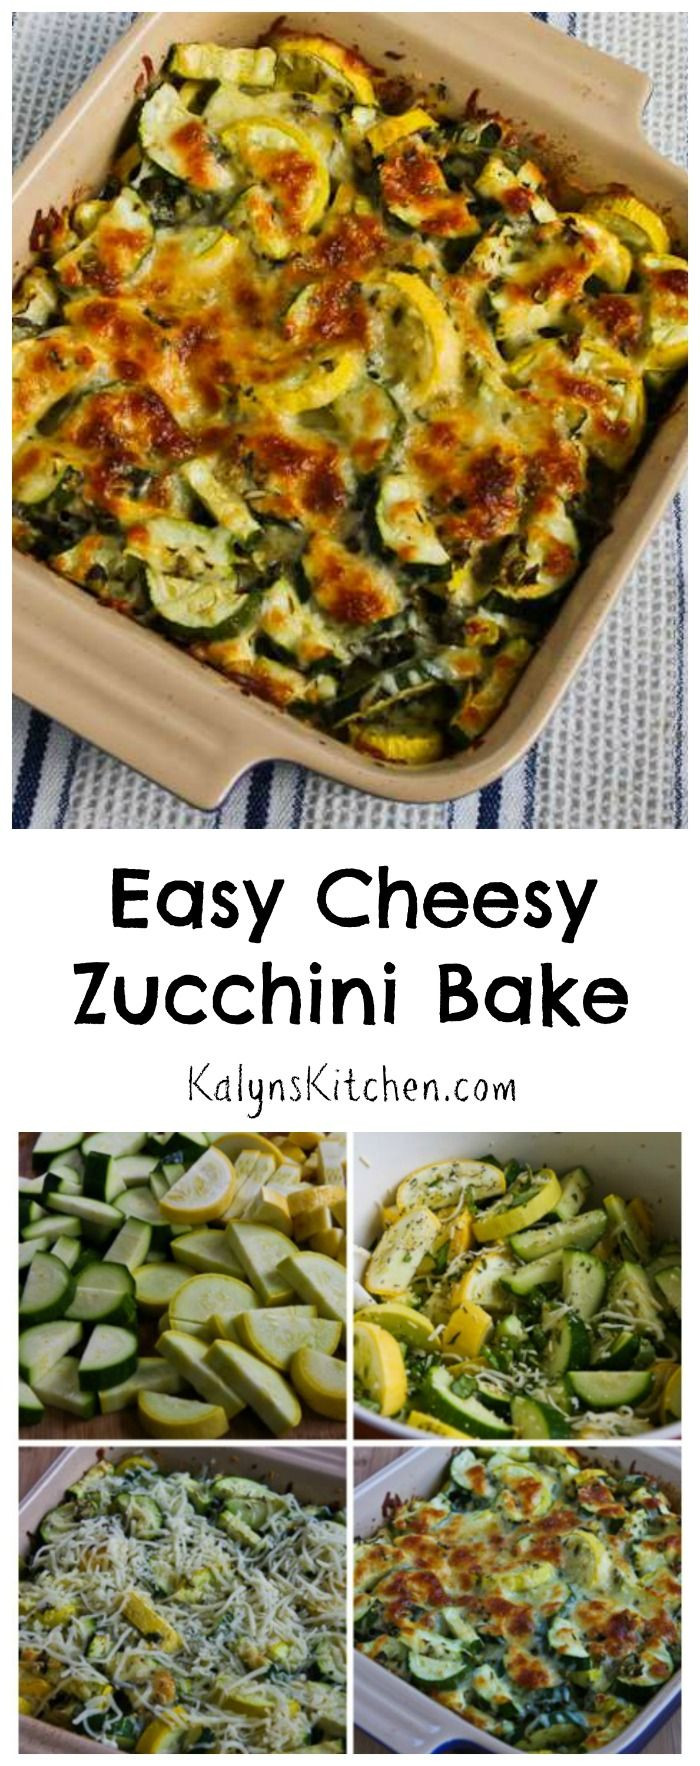 Zucchini Recipes Healthy
 The 25 best Cheesy zucchini bake ideas on Pinterest